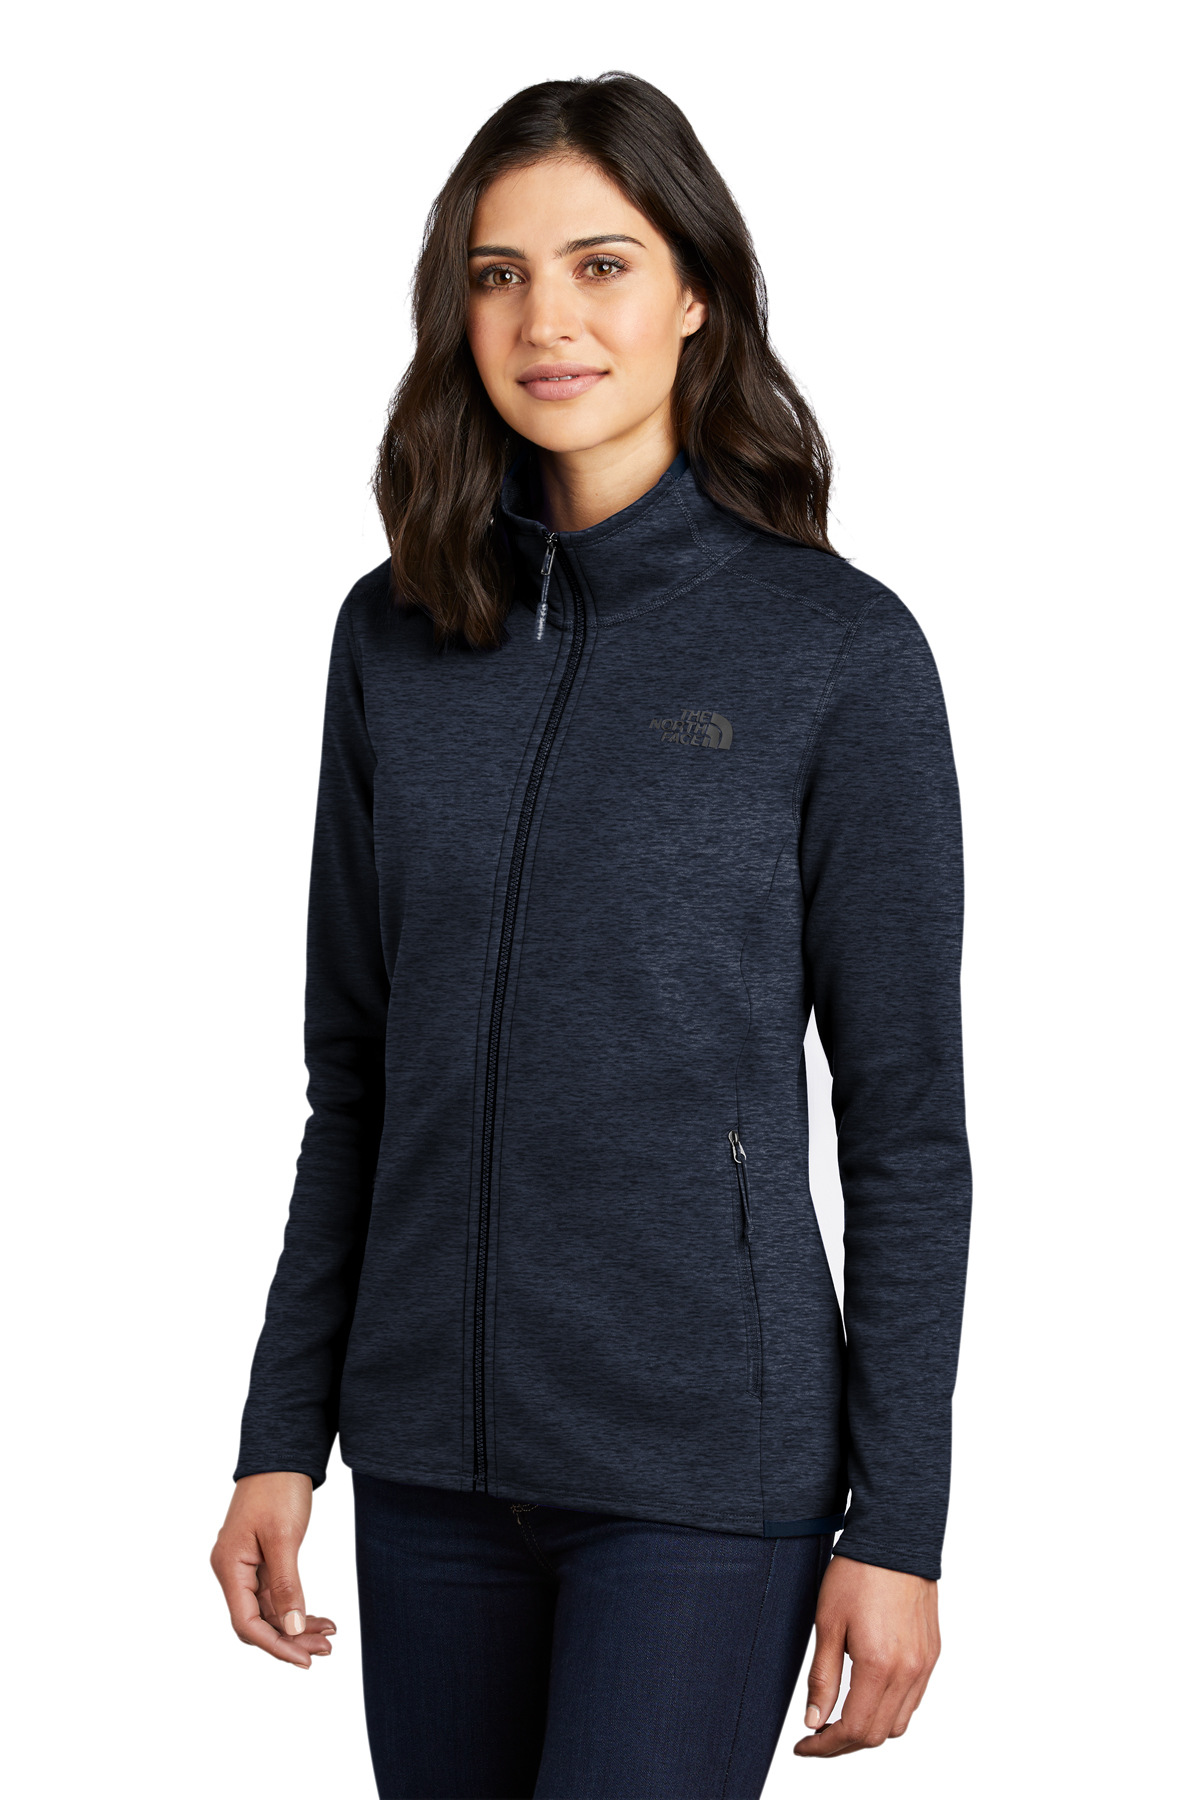 The North Face Ladies Skyline Full-Zip Fleece Jacket | Product